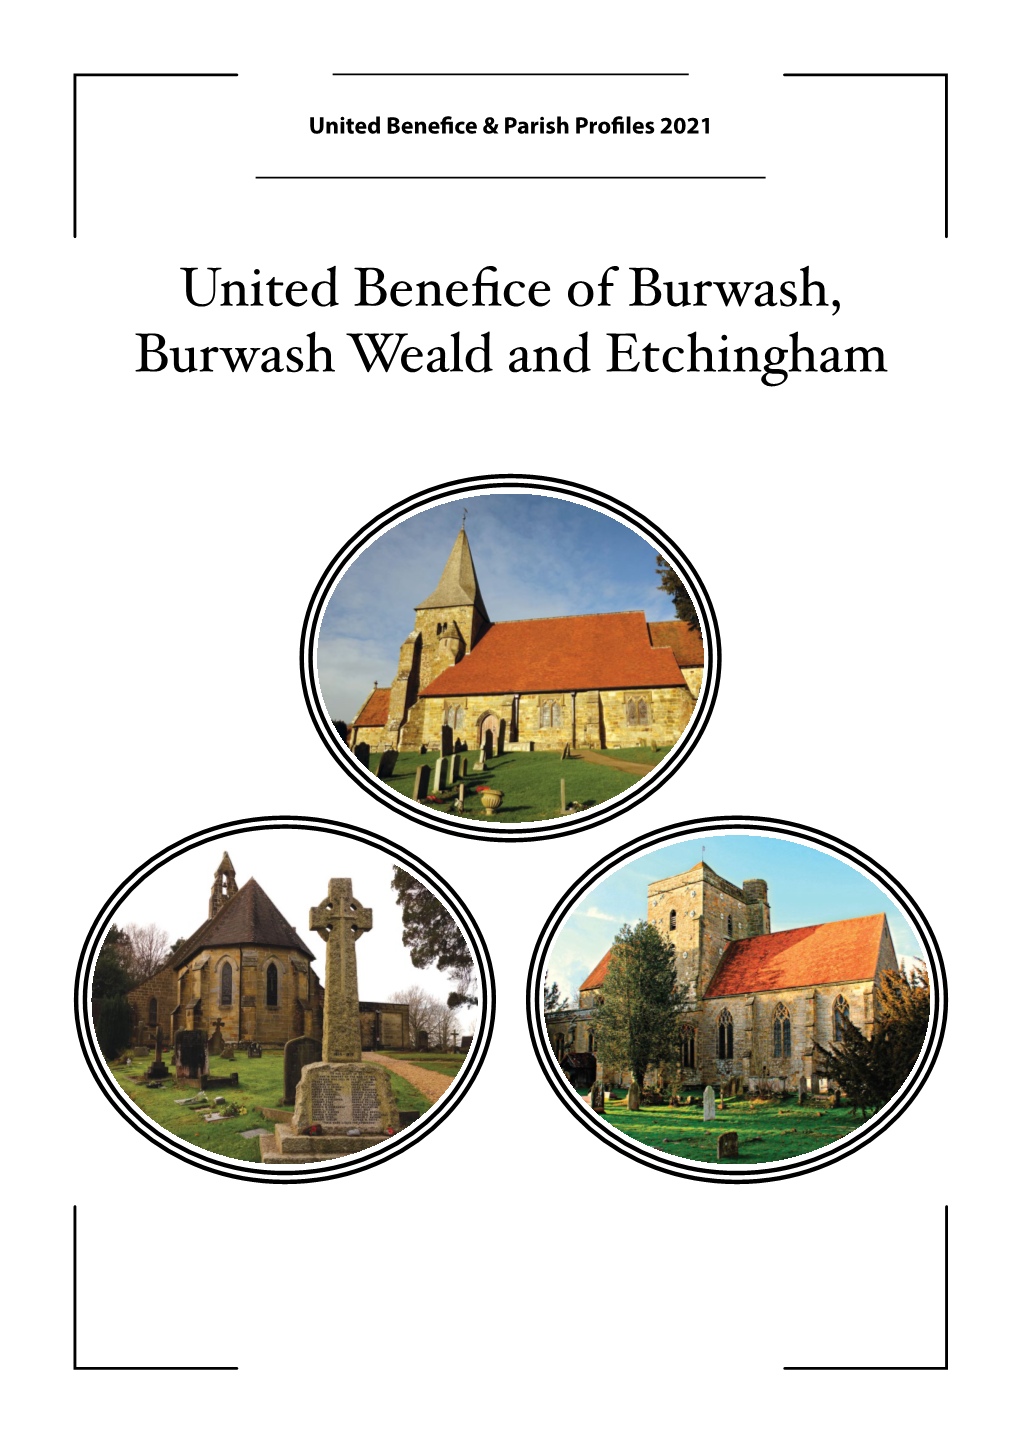 United Benefice of Burwash, Burwash Weald and Etchingham © Google Maps